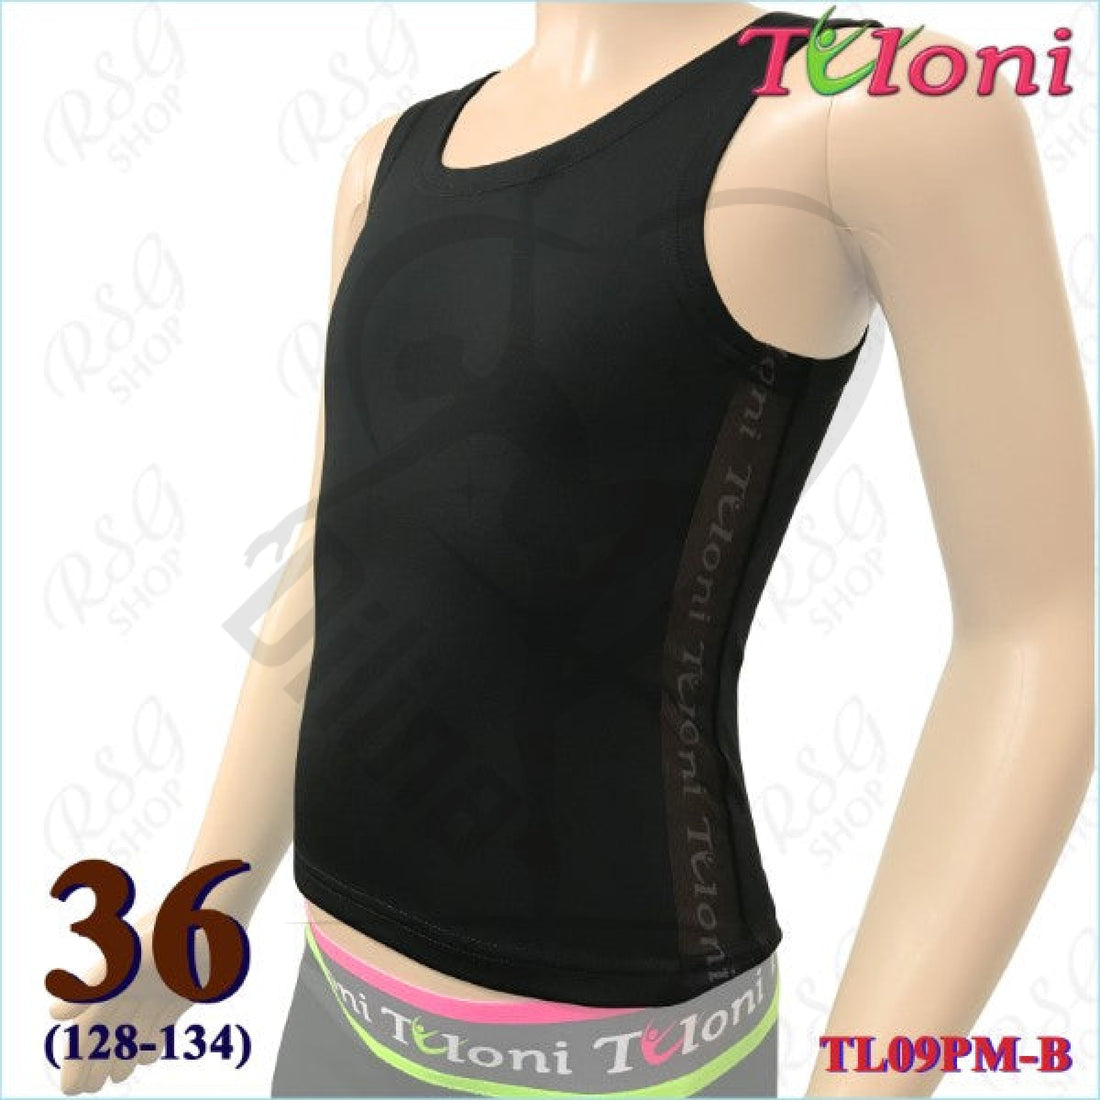 Tuloni Long Mesh Tank Top Black 36 (128-134) T Shirts & Tops